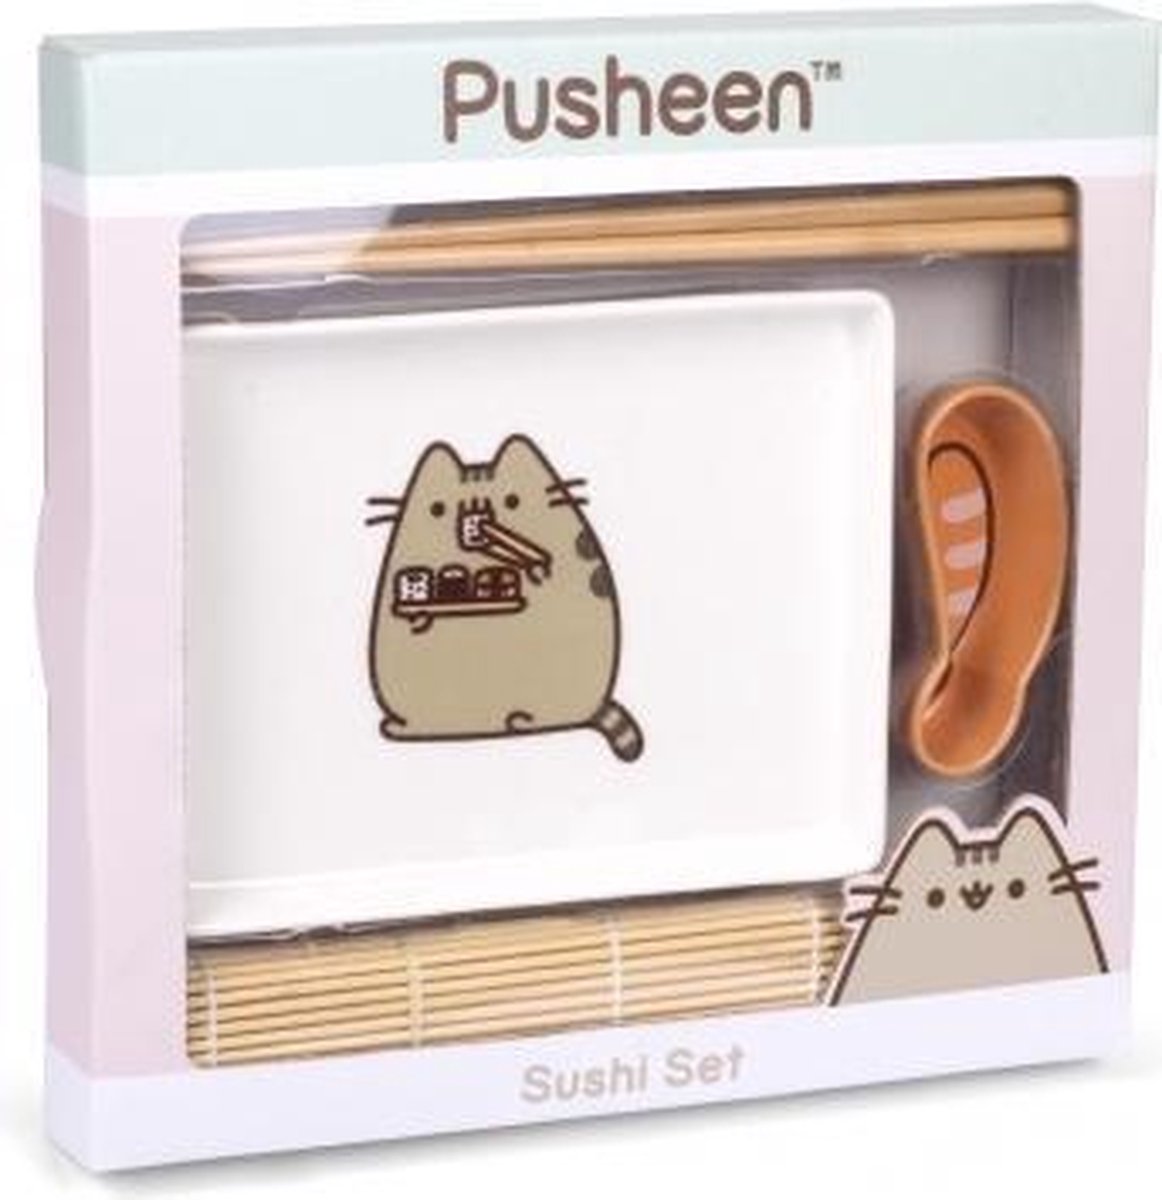 Pusheen Pusheen Sushi Maken Set